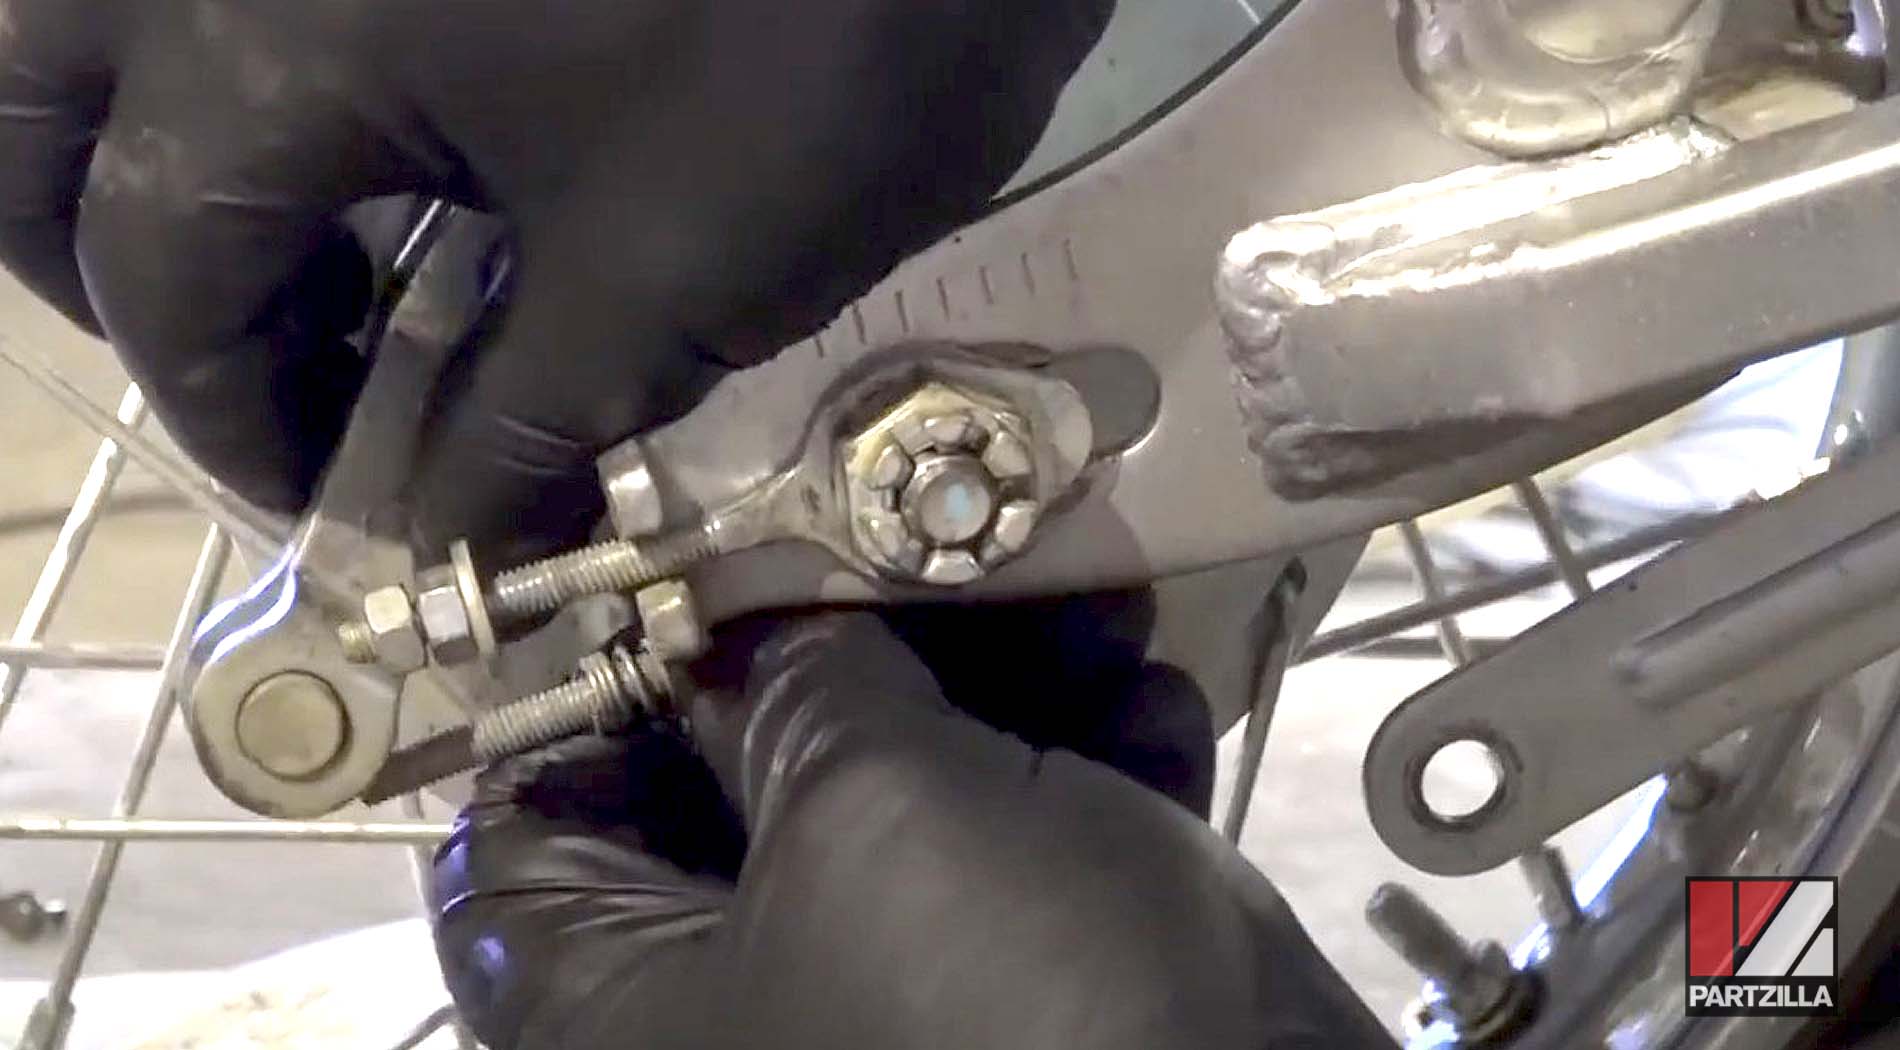 2015 Kawasaki KLX 110 motorcycle chain and sprockets removal